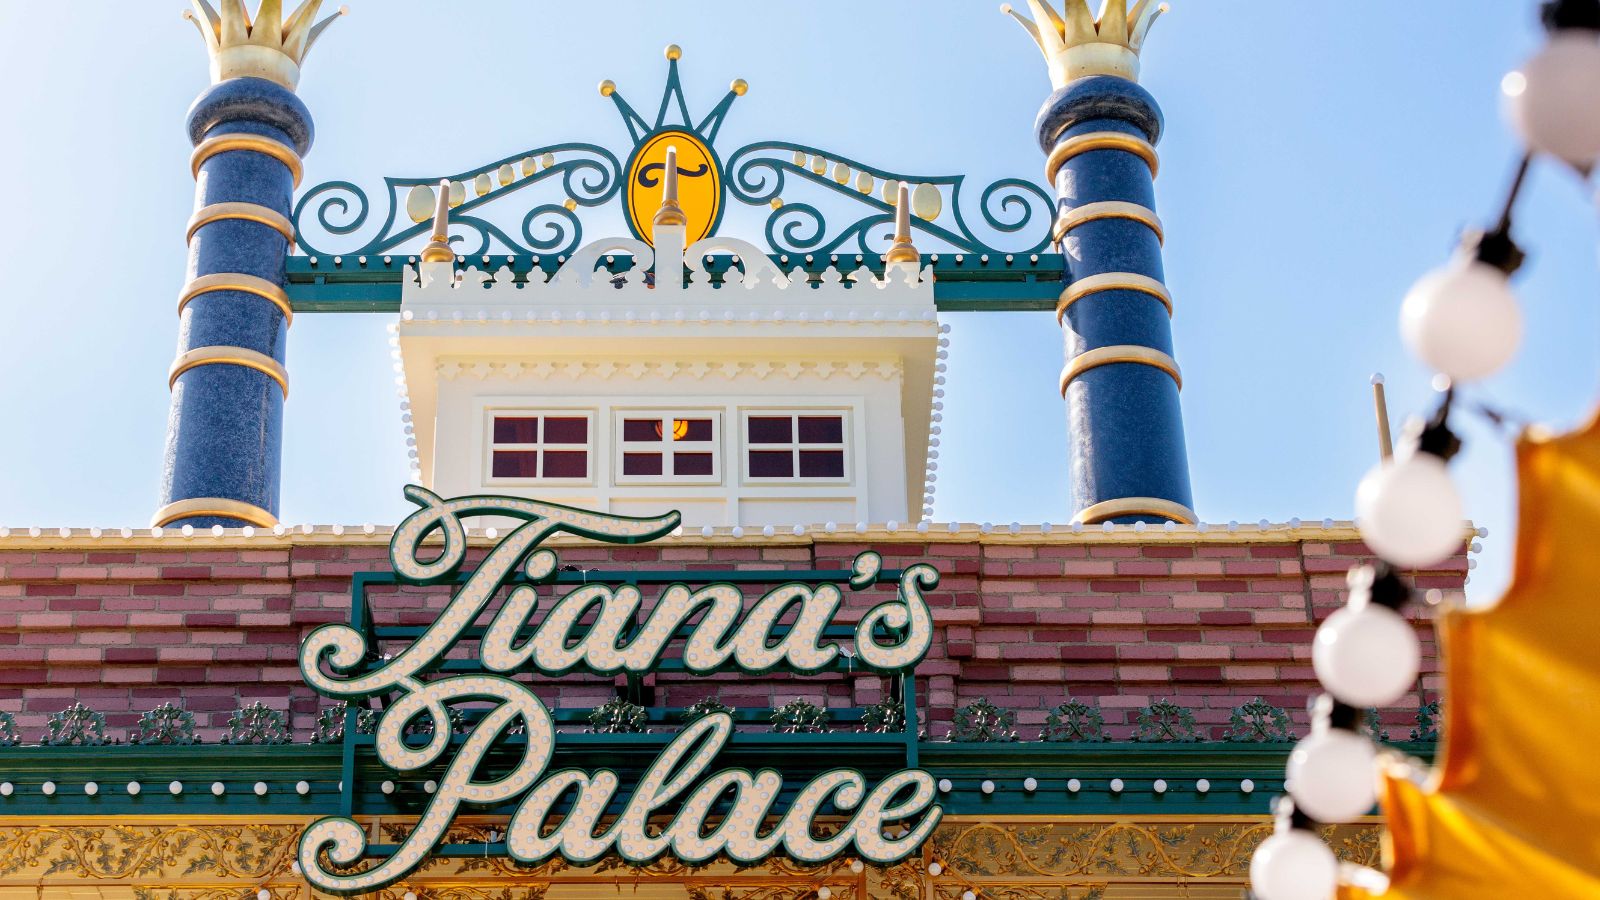 Tiana's Palace at Disneyland (Photo: Disney)